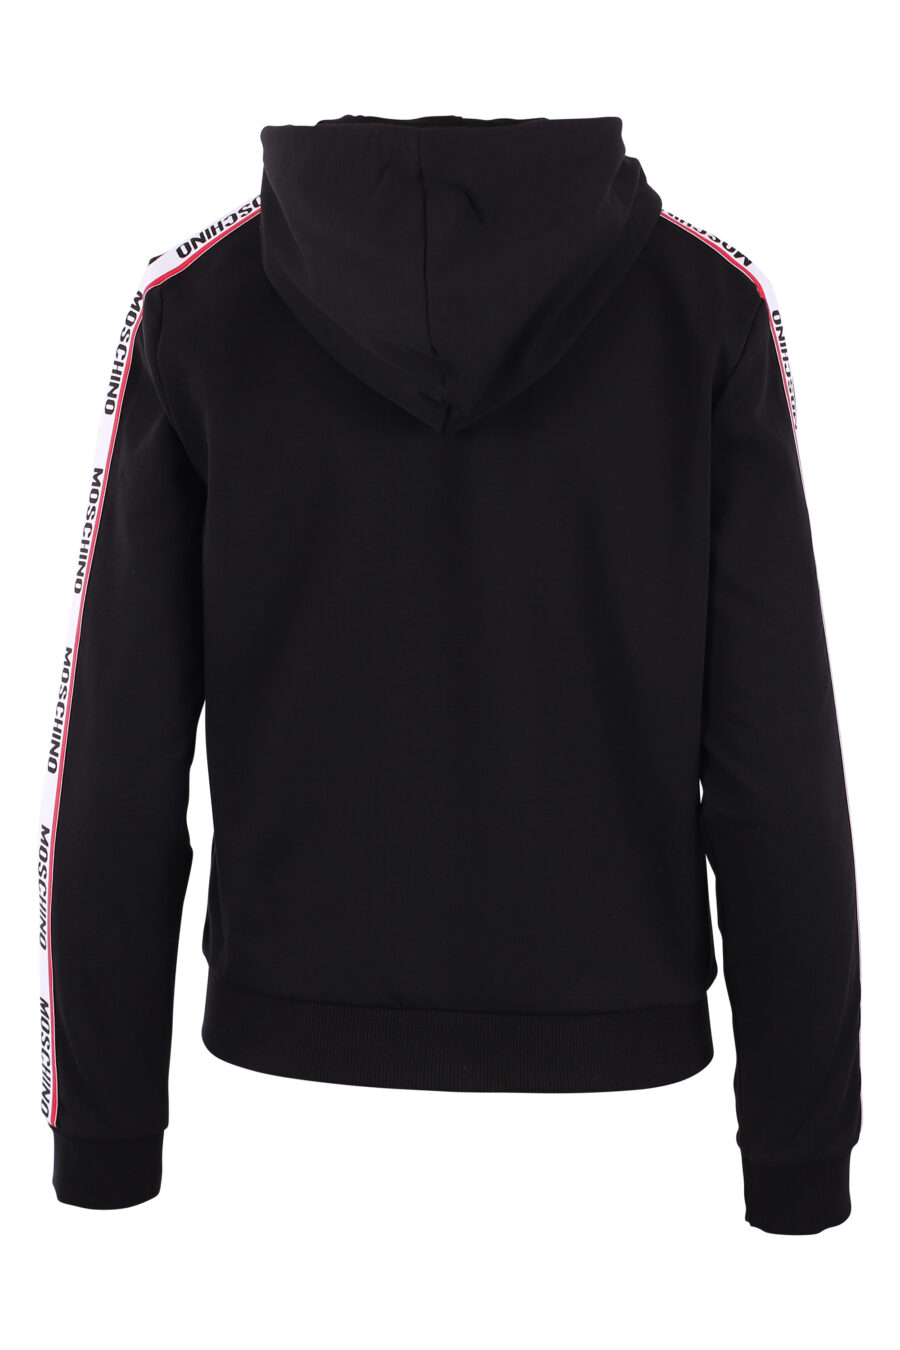 Black hooded sweatshirt with monochrome logo - IMG 6215